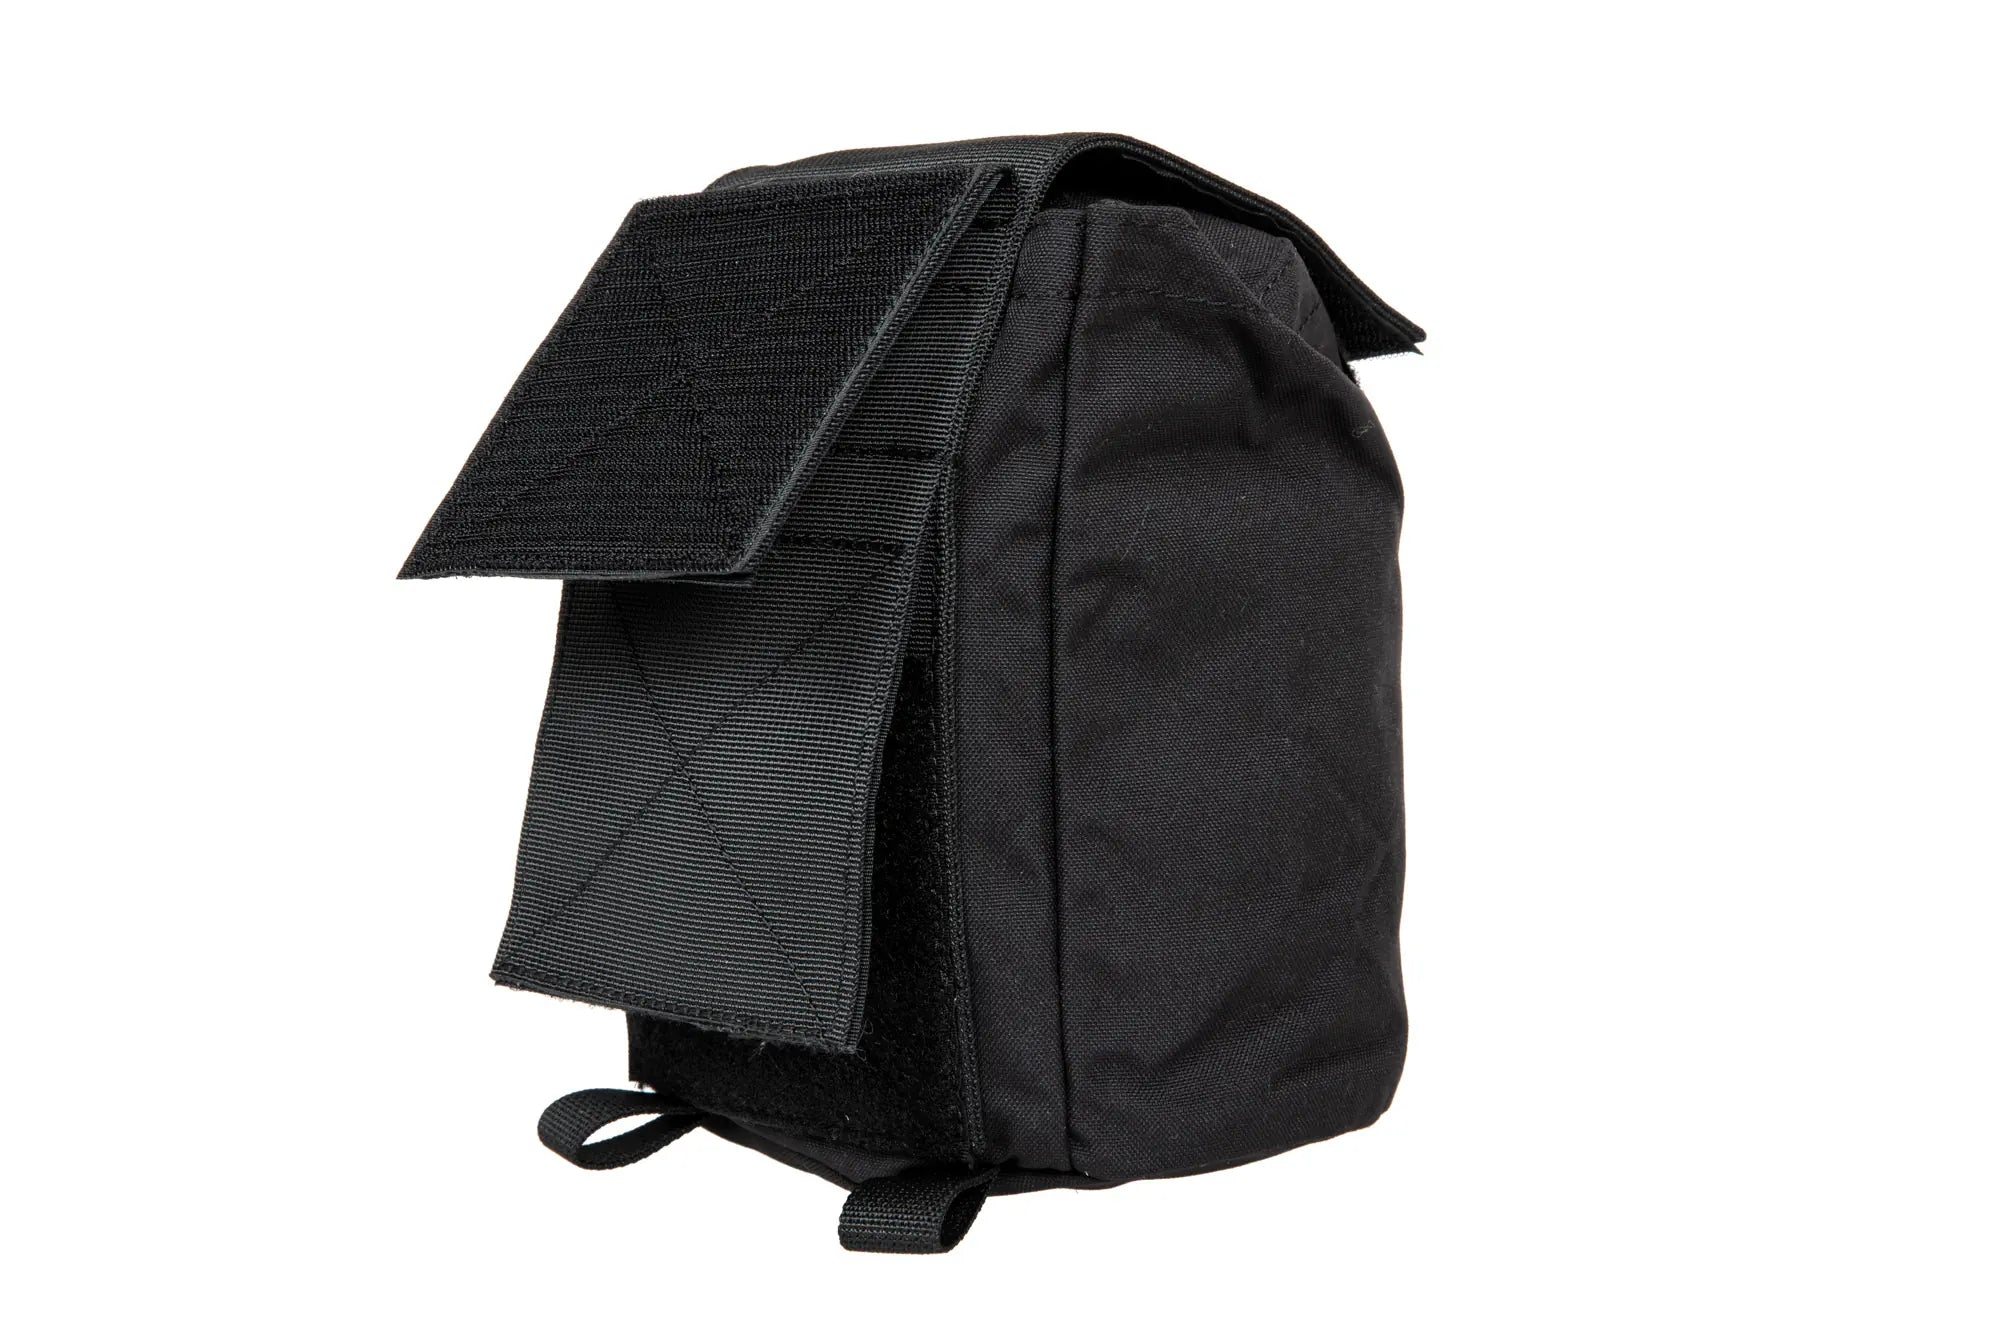 Tactical storage bag - Black-3